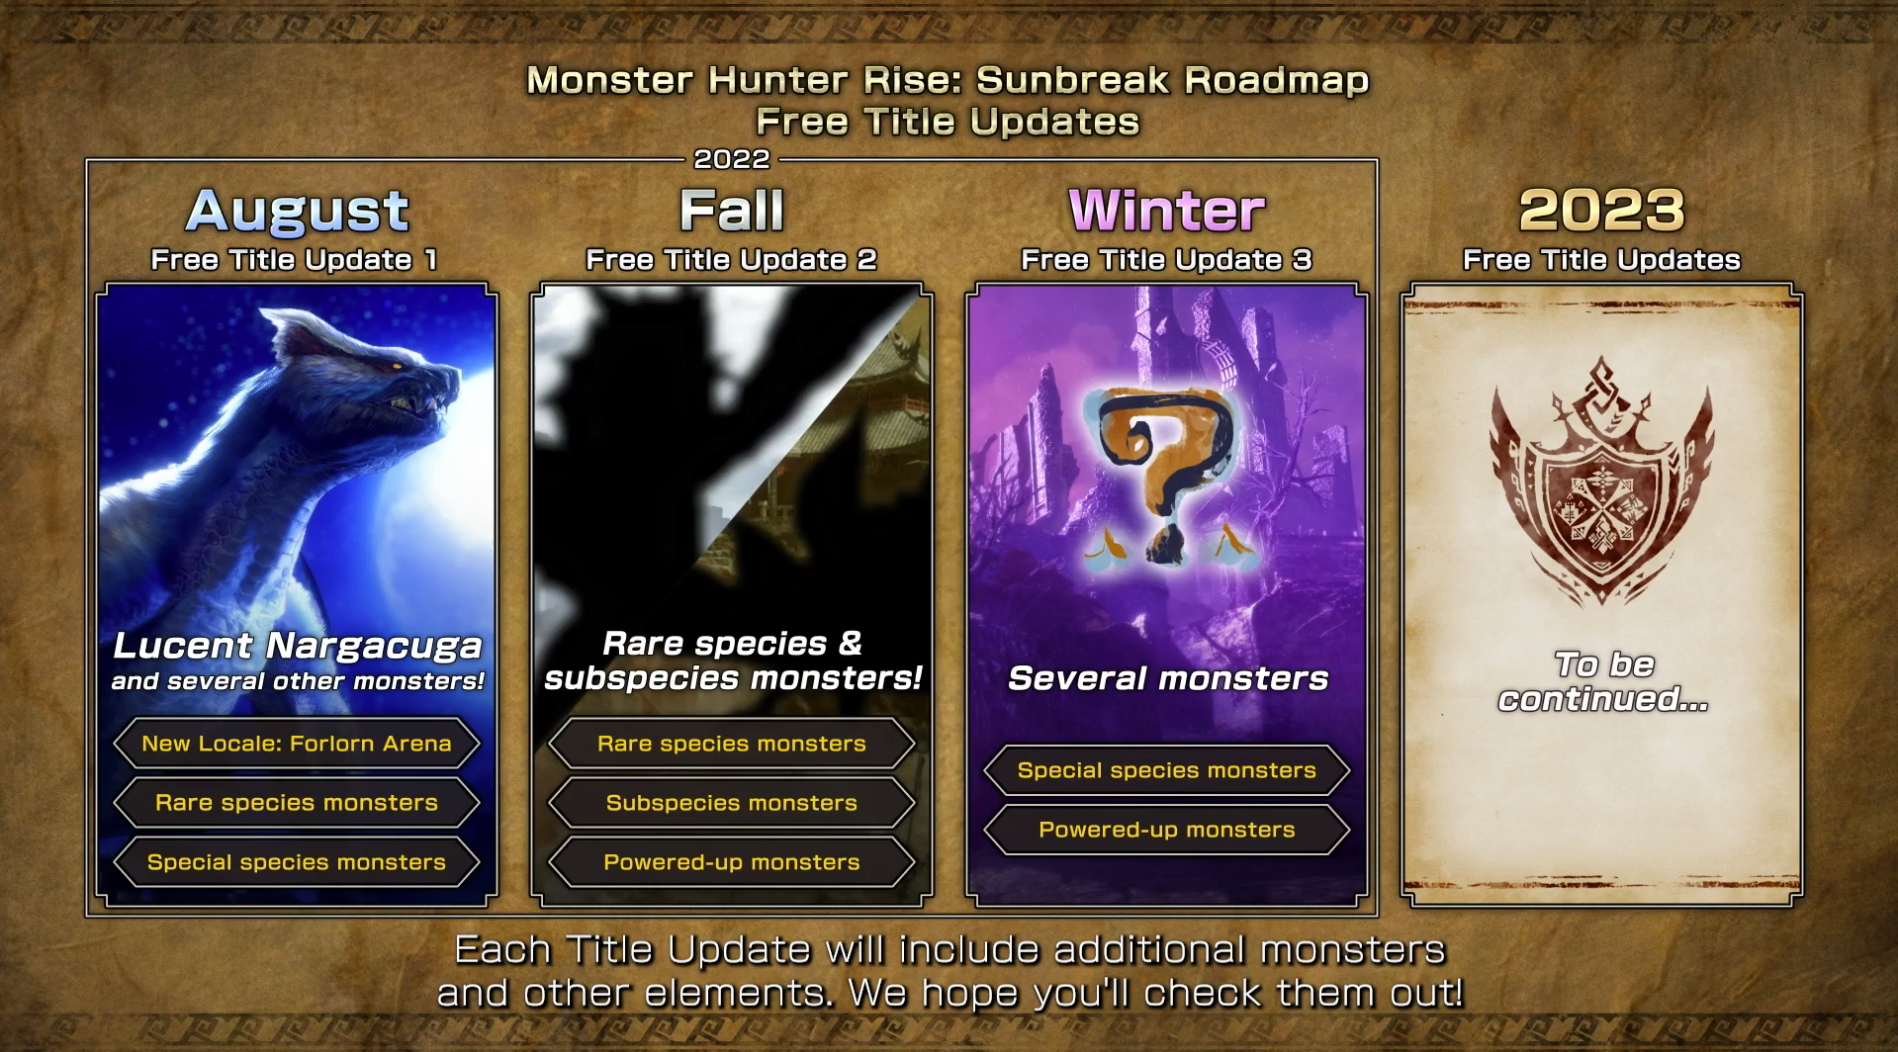 Monster Hunter Rise: Sunbreak - A New Frontier 